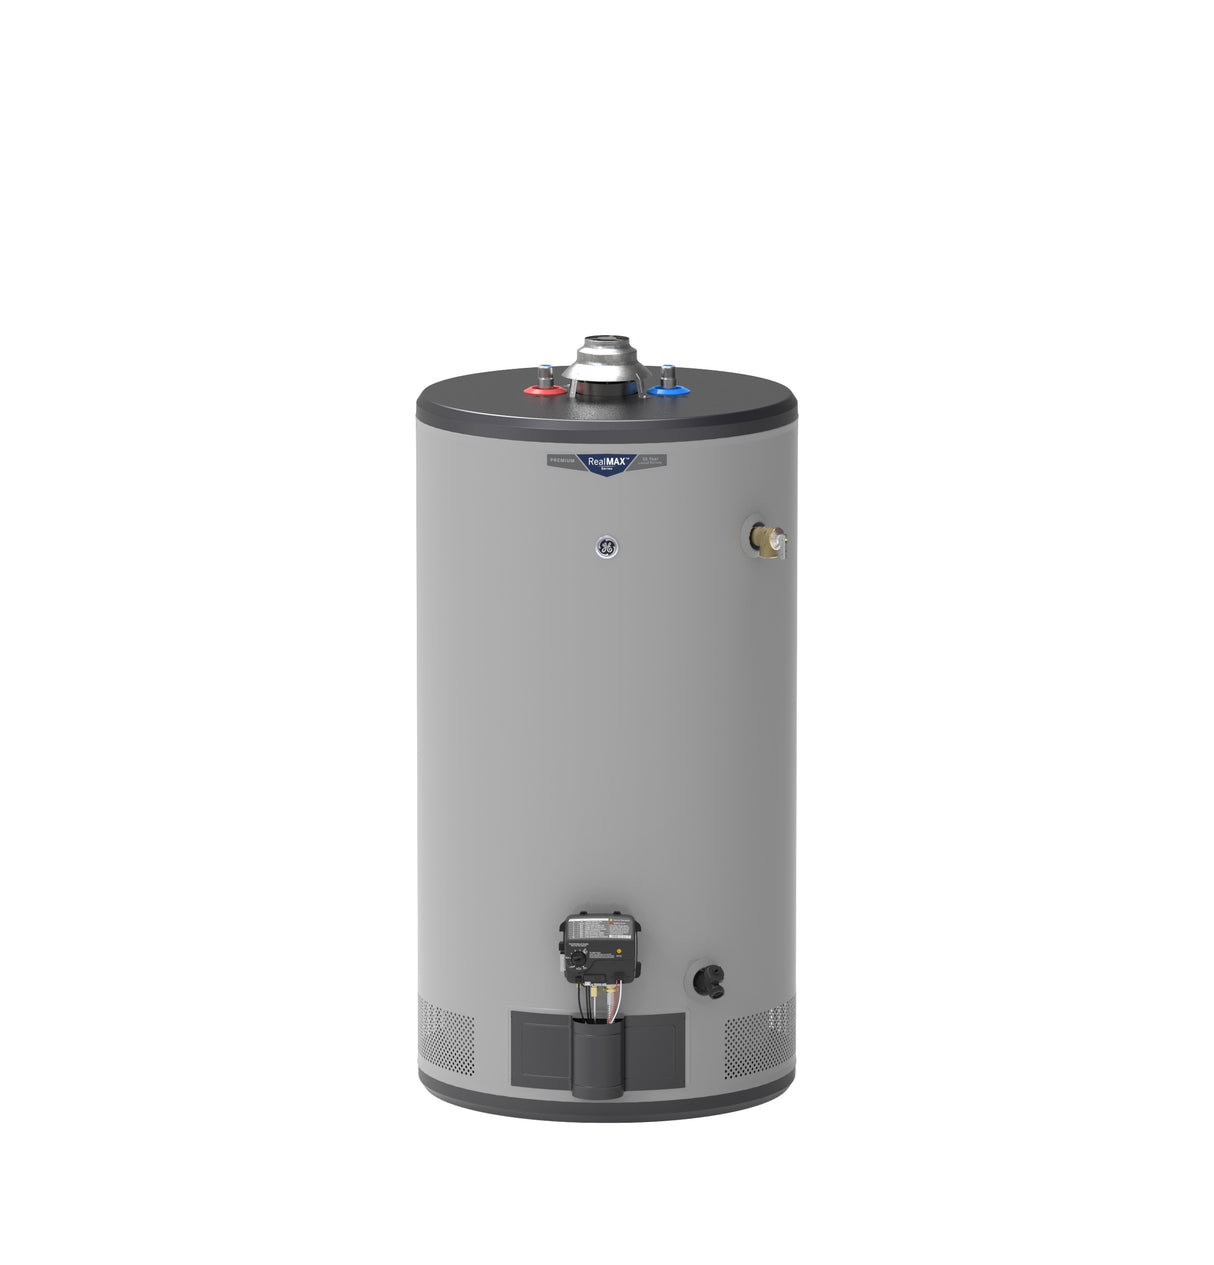 GE RealMAX Premium 50-Gallon Short Natural Gas Atmospheric Water Heater - (GG50S10BXR)